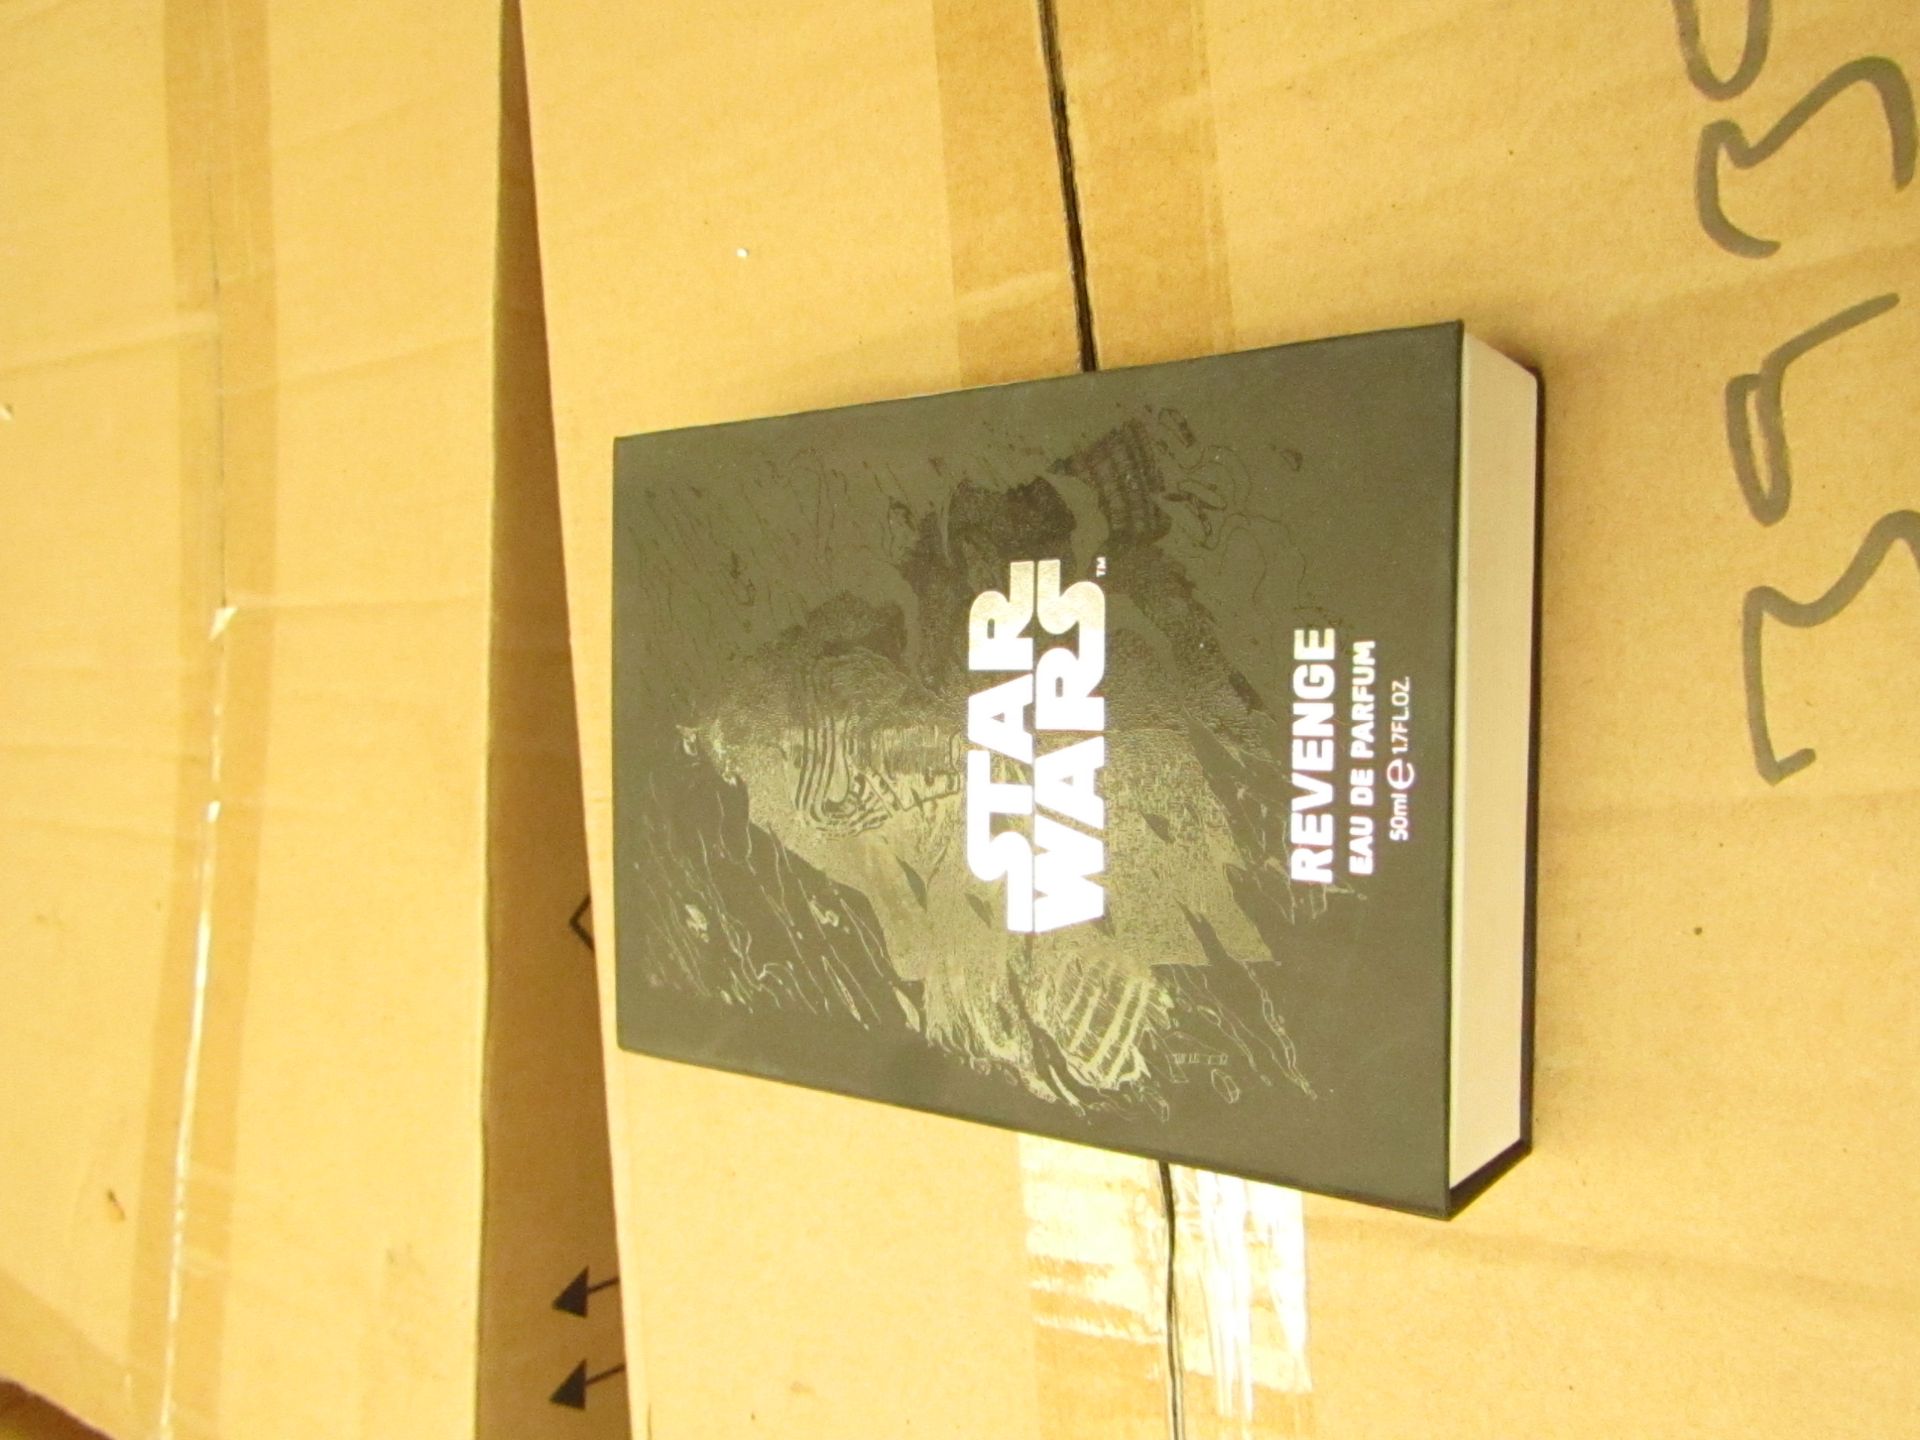 24x Star Wars Eau De Parfum Revenge. 50ml. New & Packaged